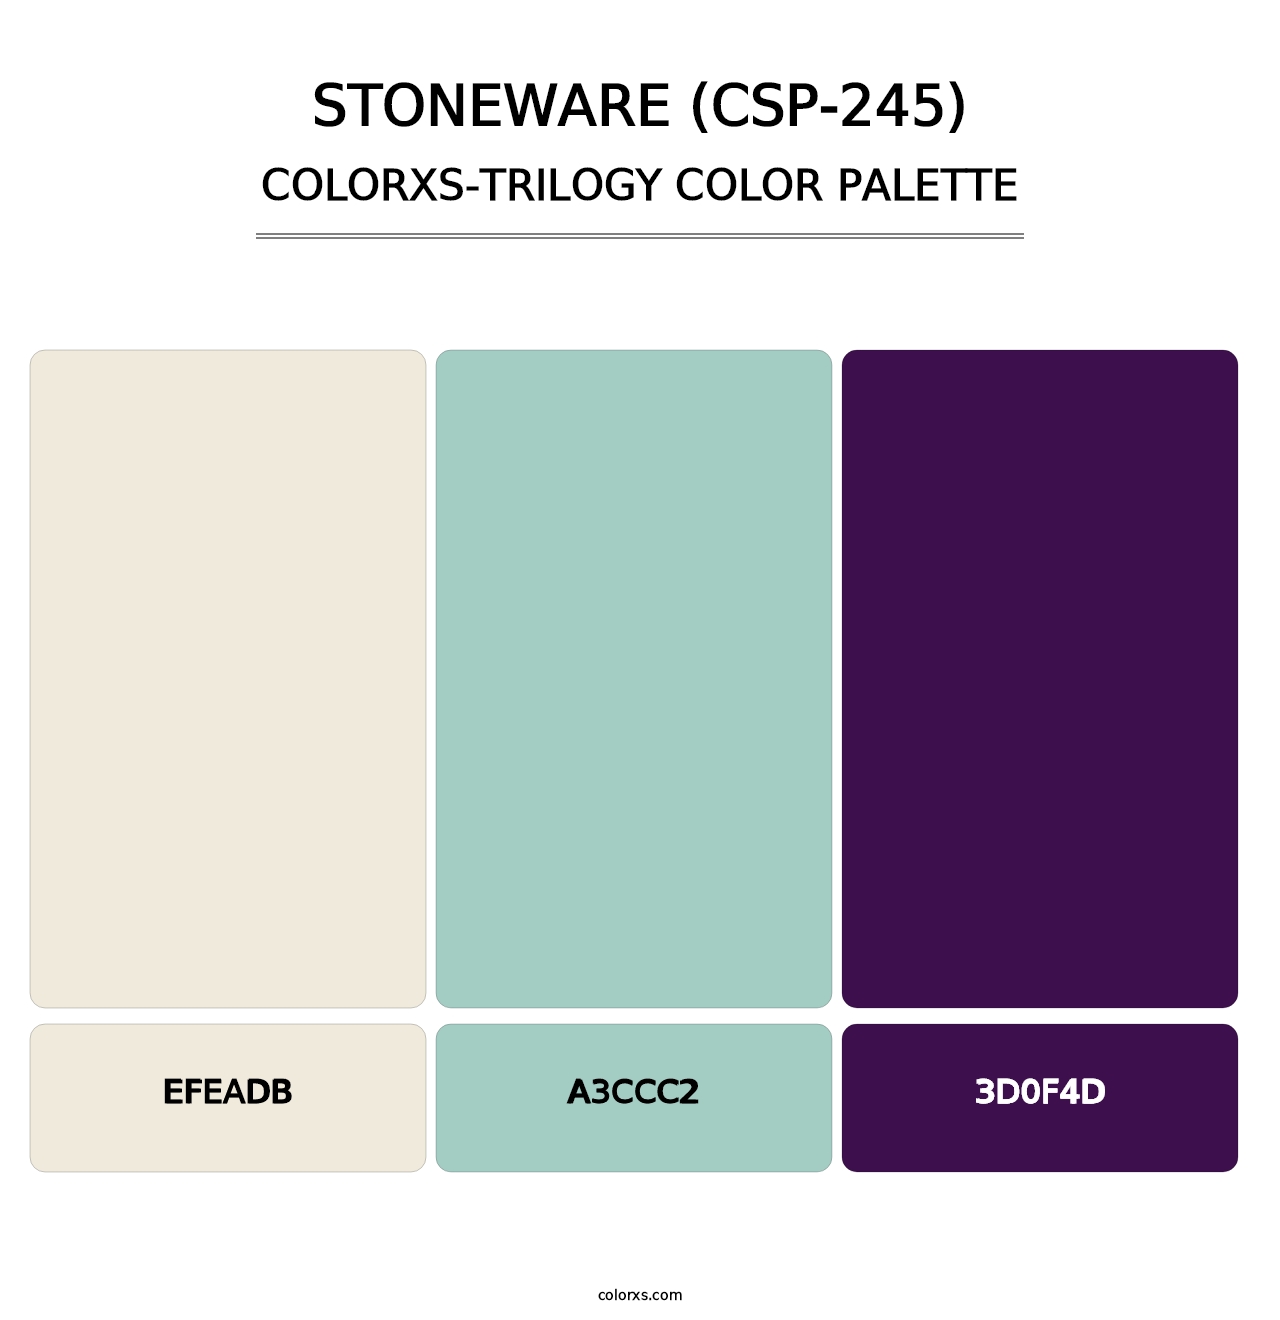 Stoneware (CSP-245) - Colorxs Trilogy Palette